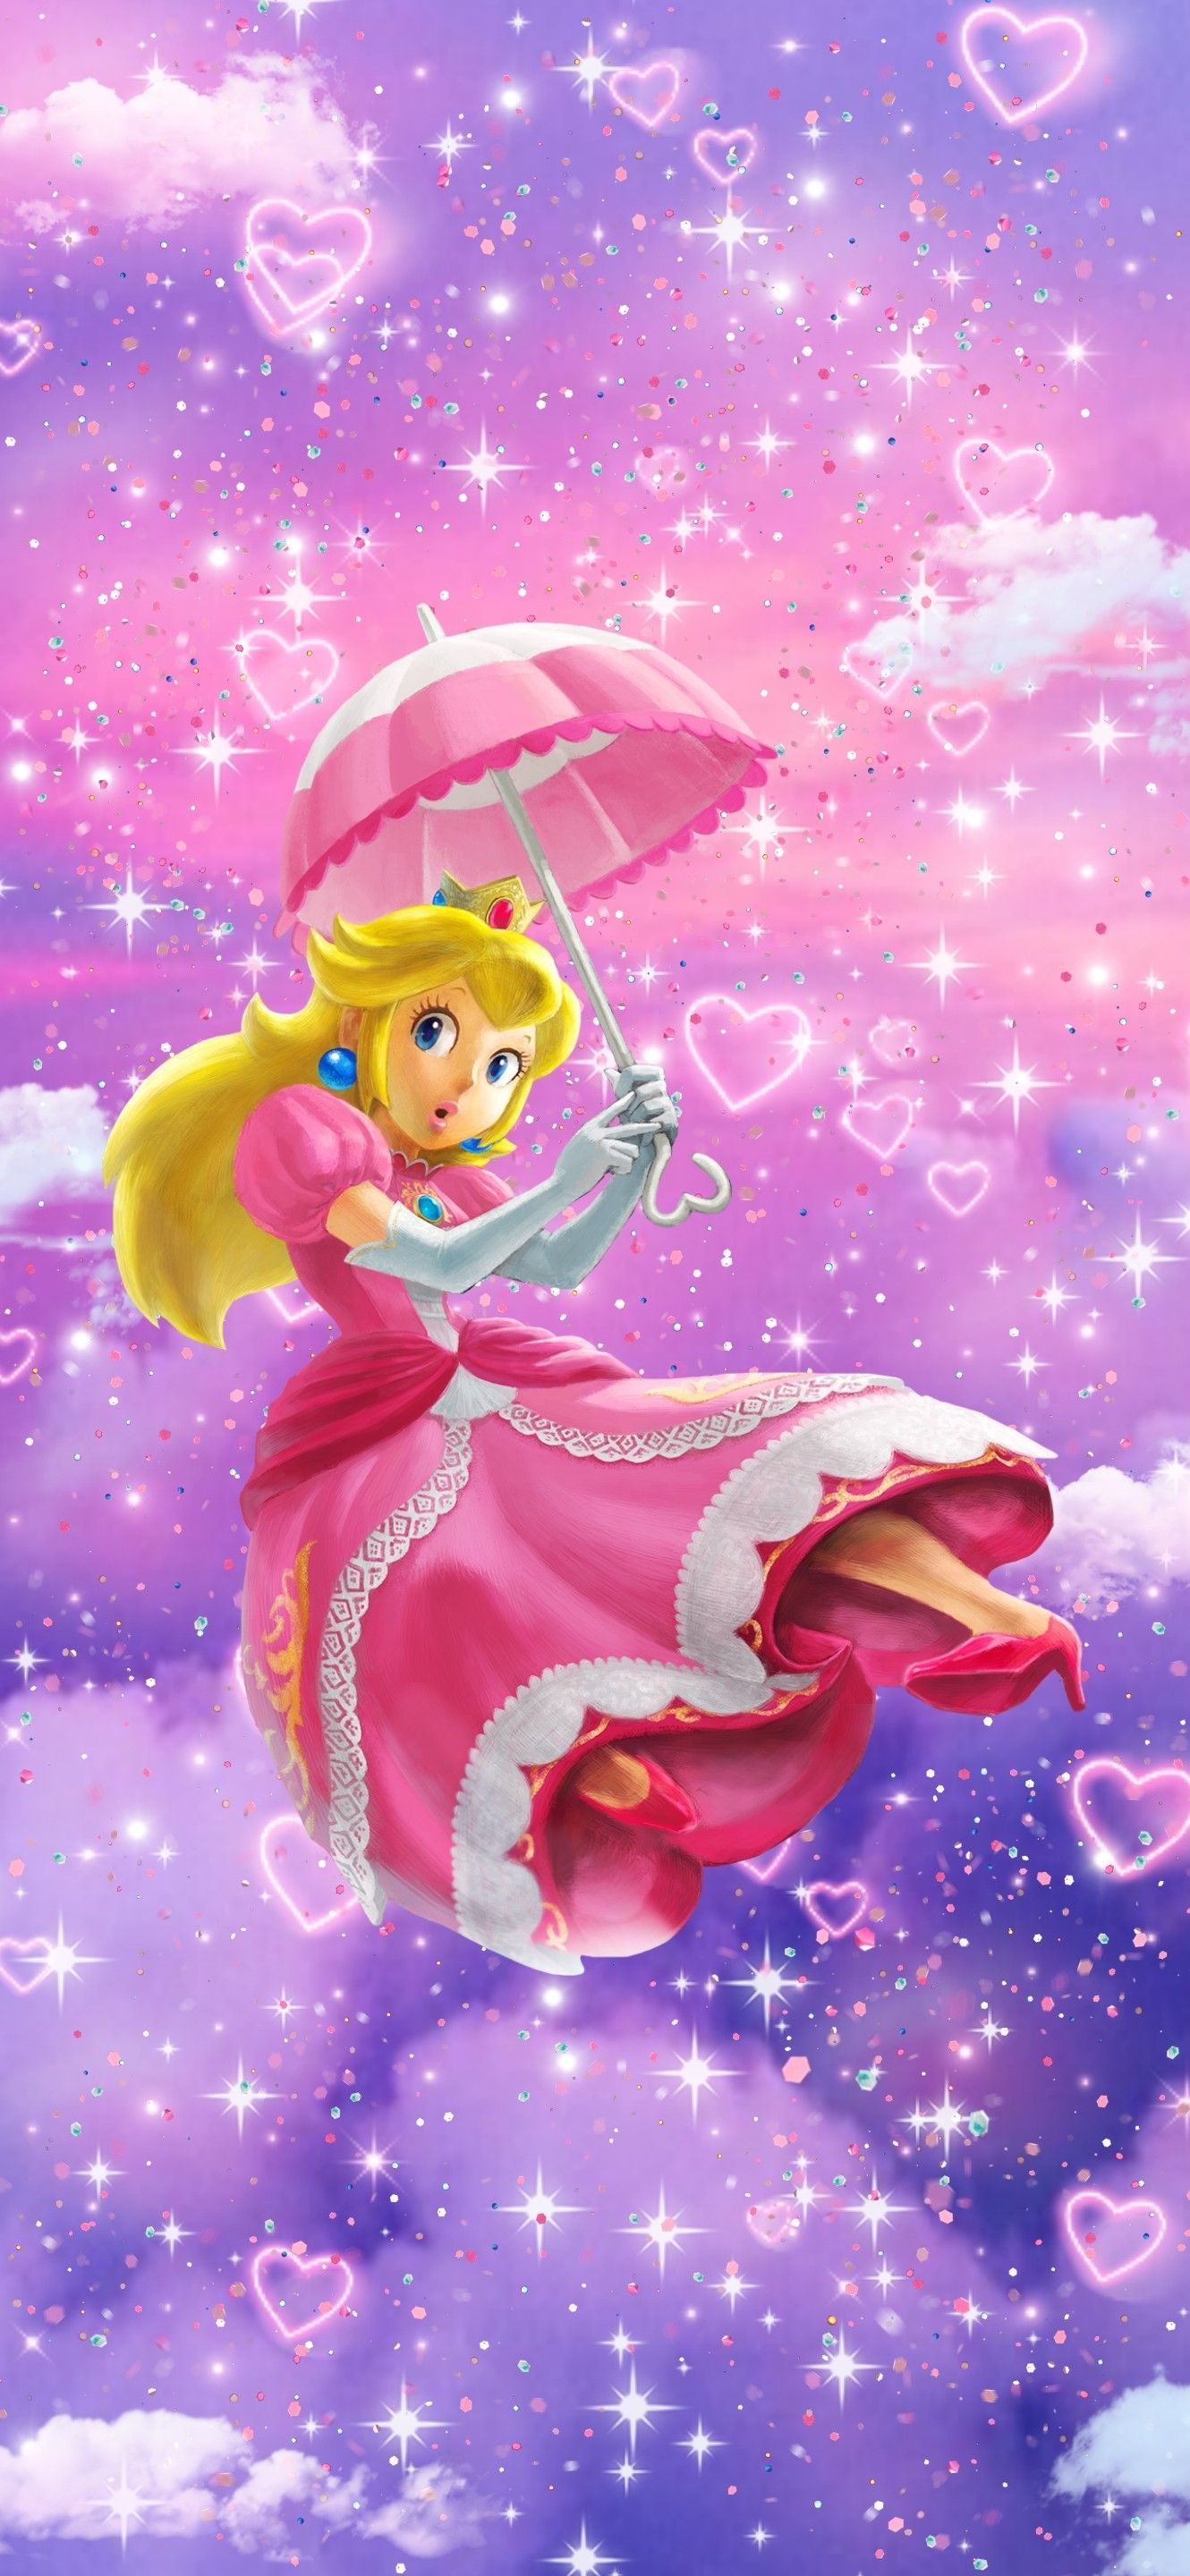 A cartoon character is flying through the sky - Princess Peach, Nintendo, Super Mario